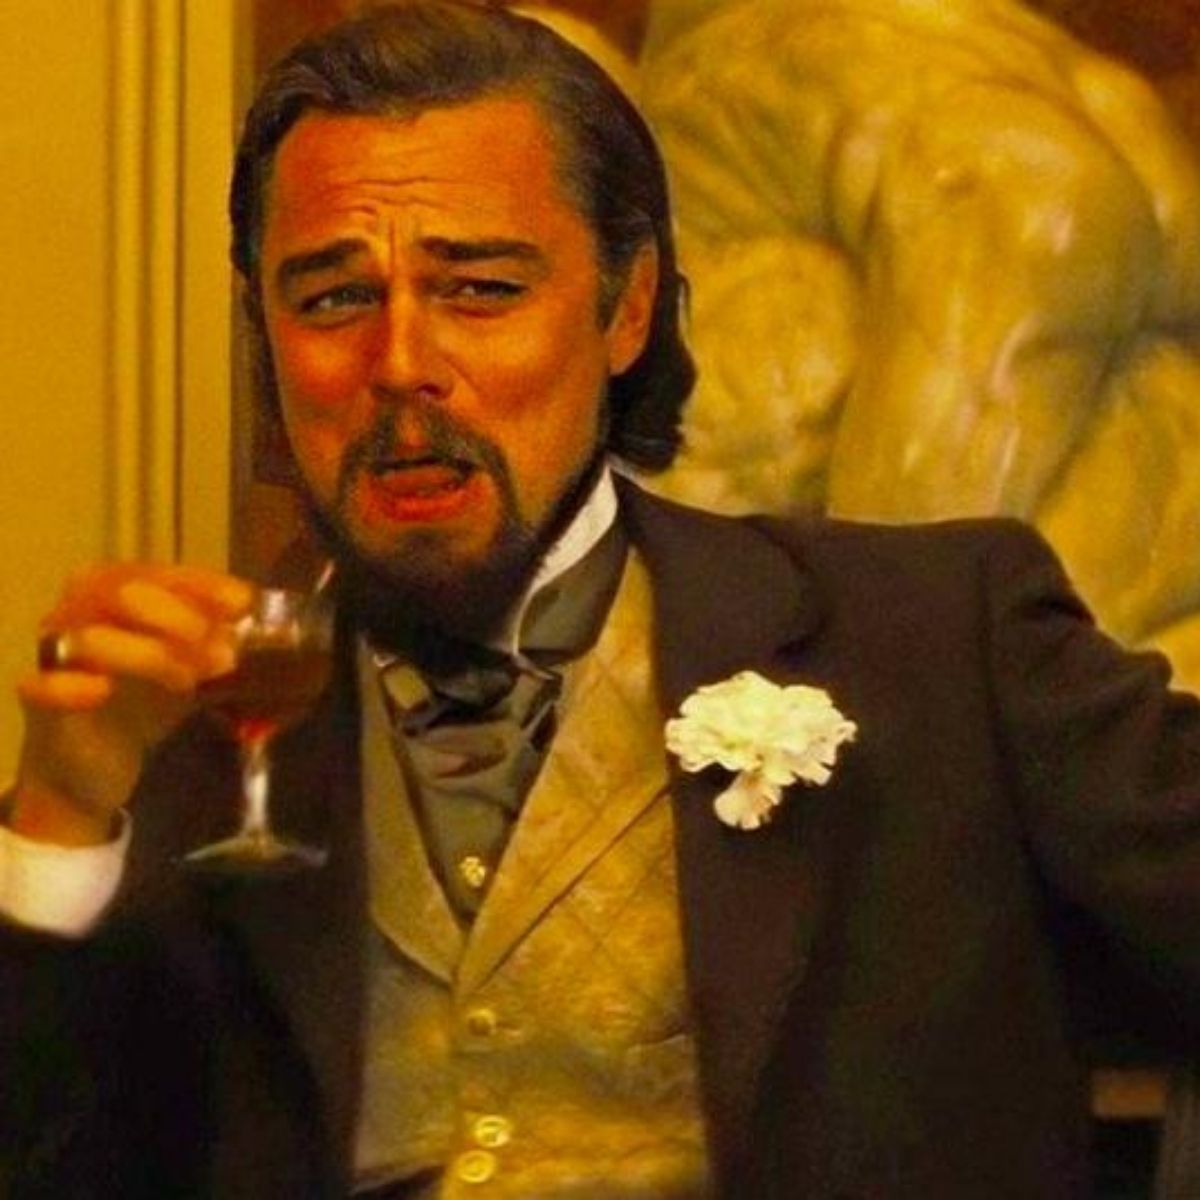 Leonardo-DiCaprio-laughing-meme-template-of-Django-Unchained.jpg